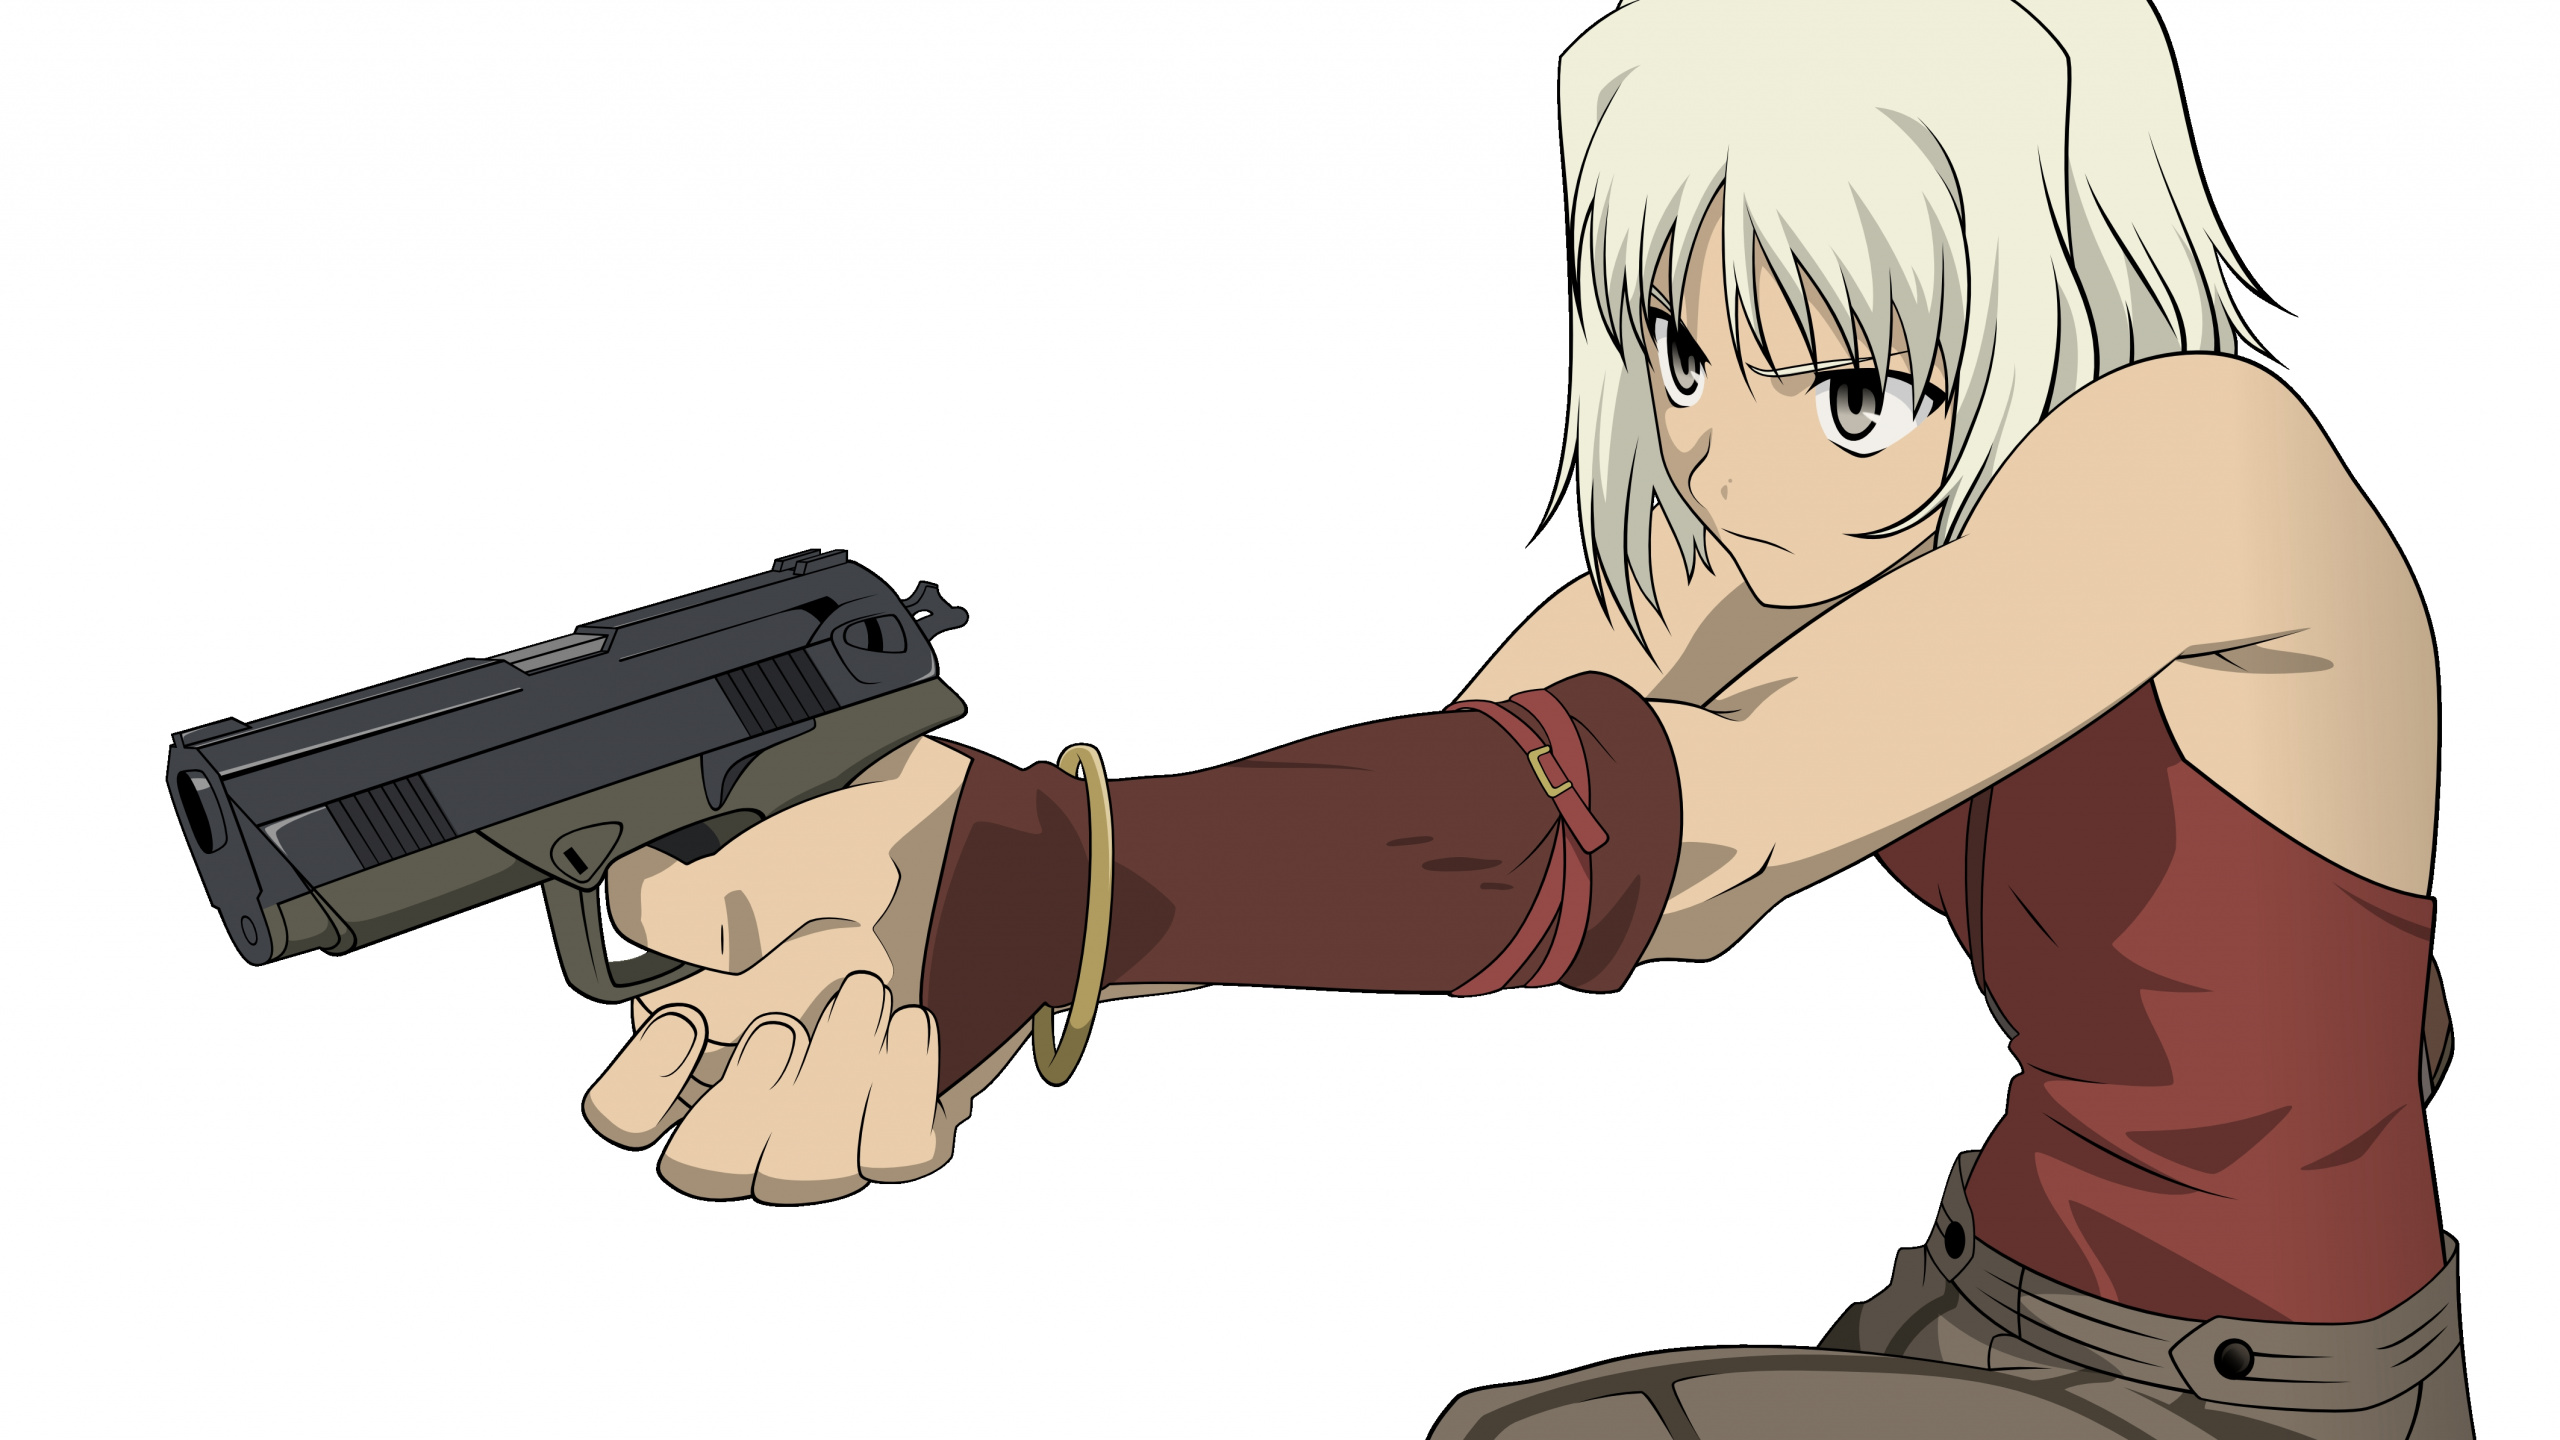 Personaje de Anime Masculino de Pelo Rubio Sosteniendo Una Pistola Semiautomática Negra. Wallpaper in 2560x1440 Resolution